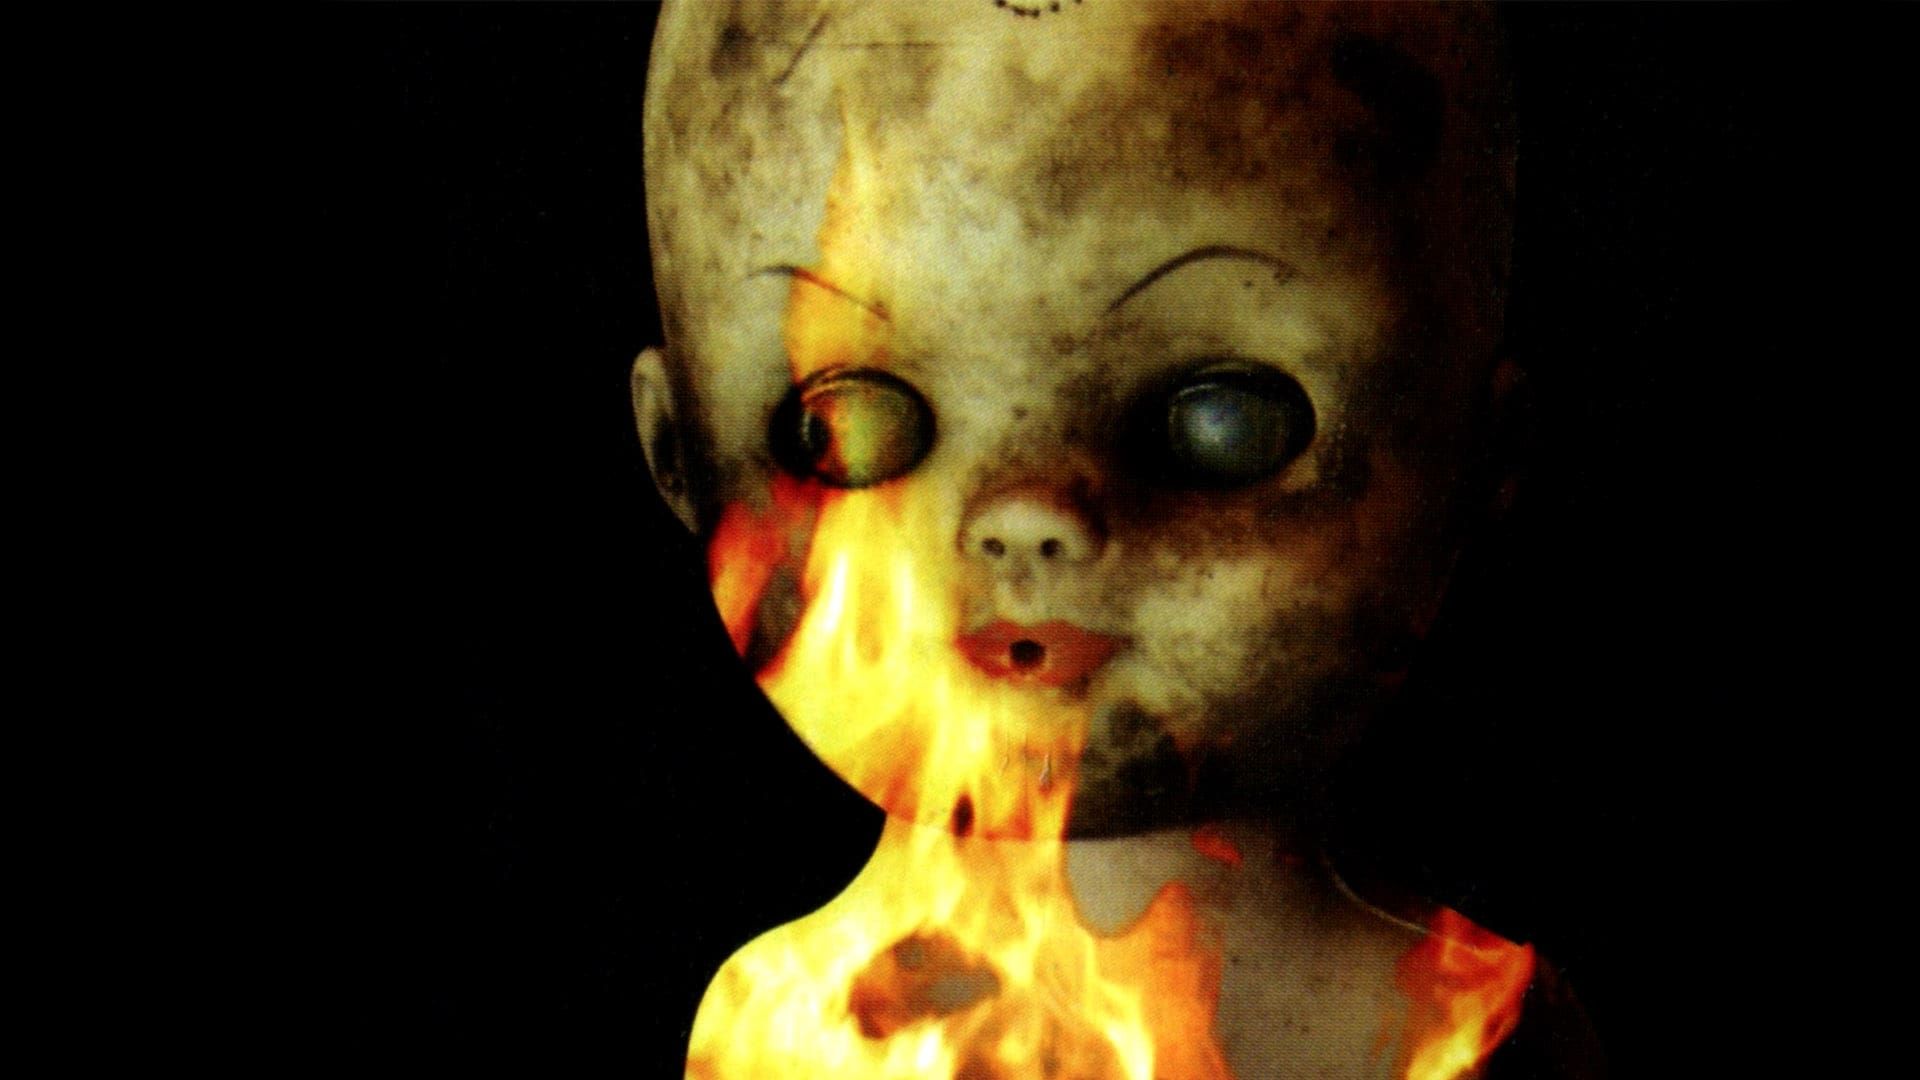 666: The Demon Child background